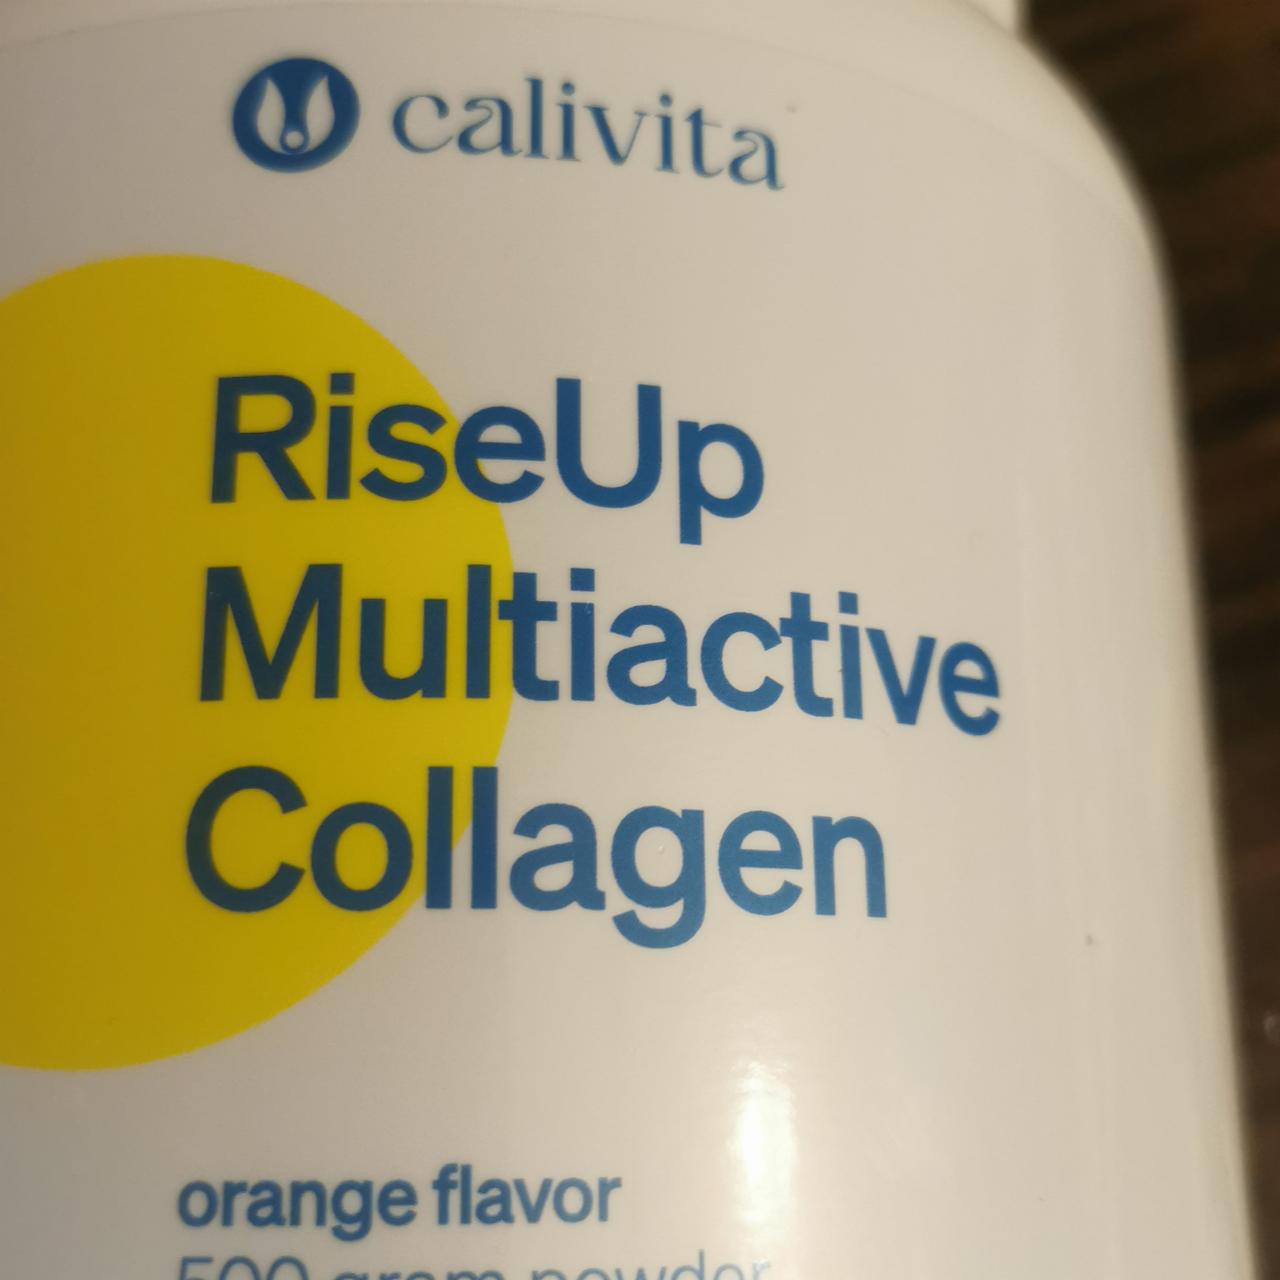 Fotografie - RiseUp Multiactive Collagen orange flavor Calivita